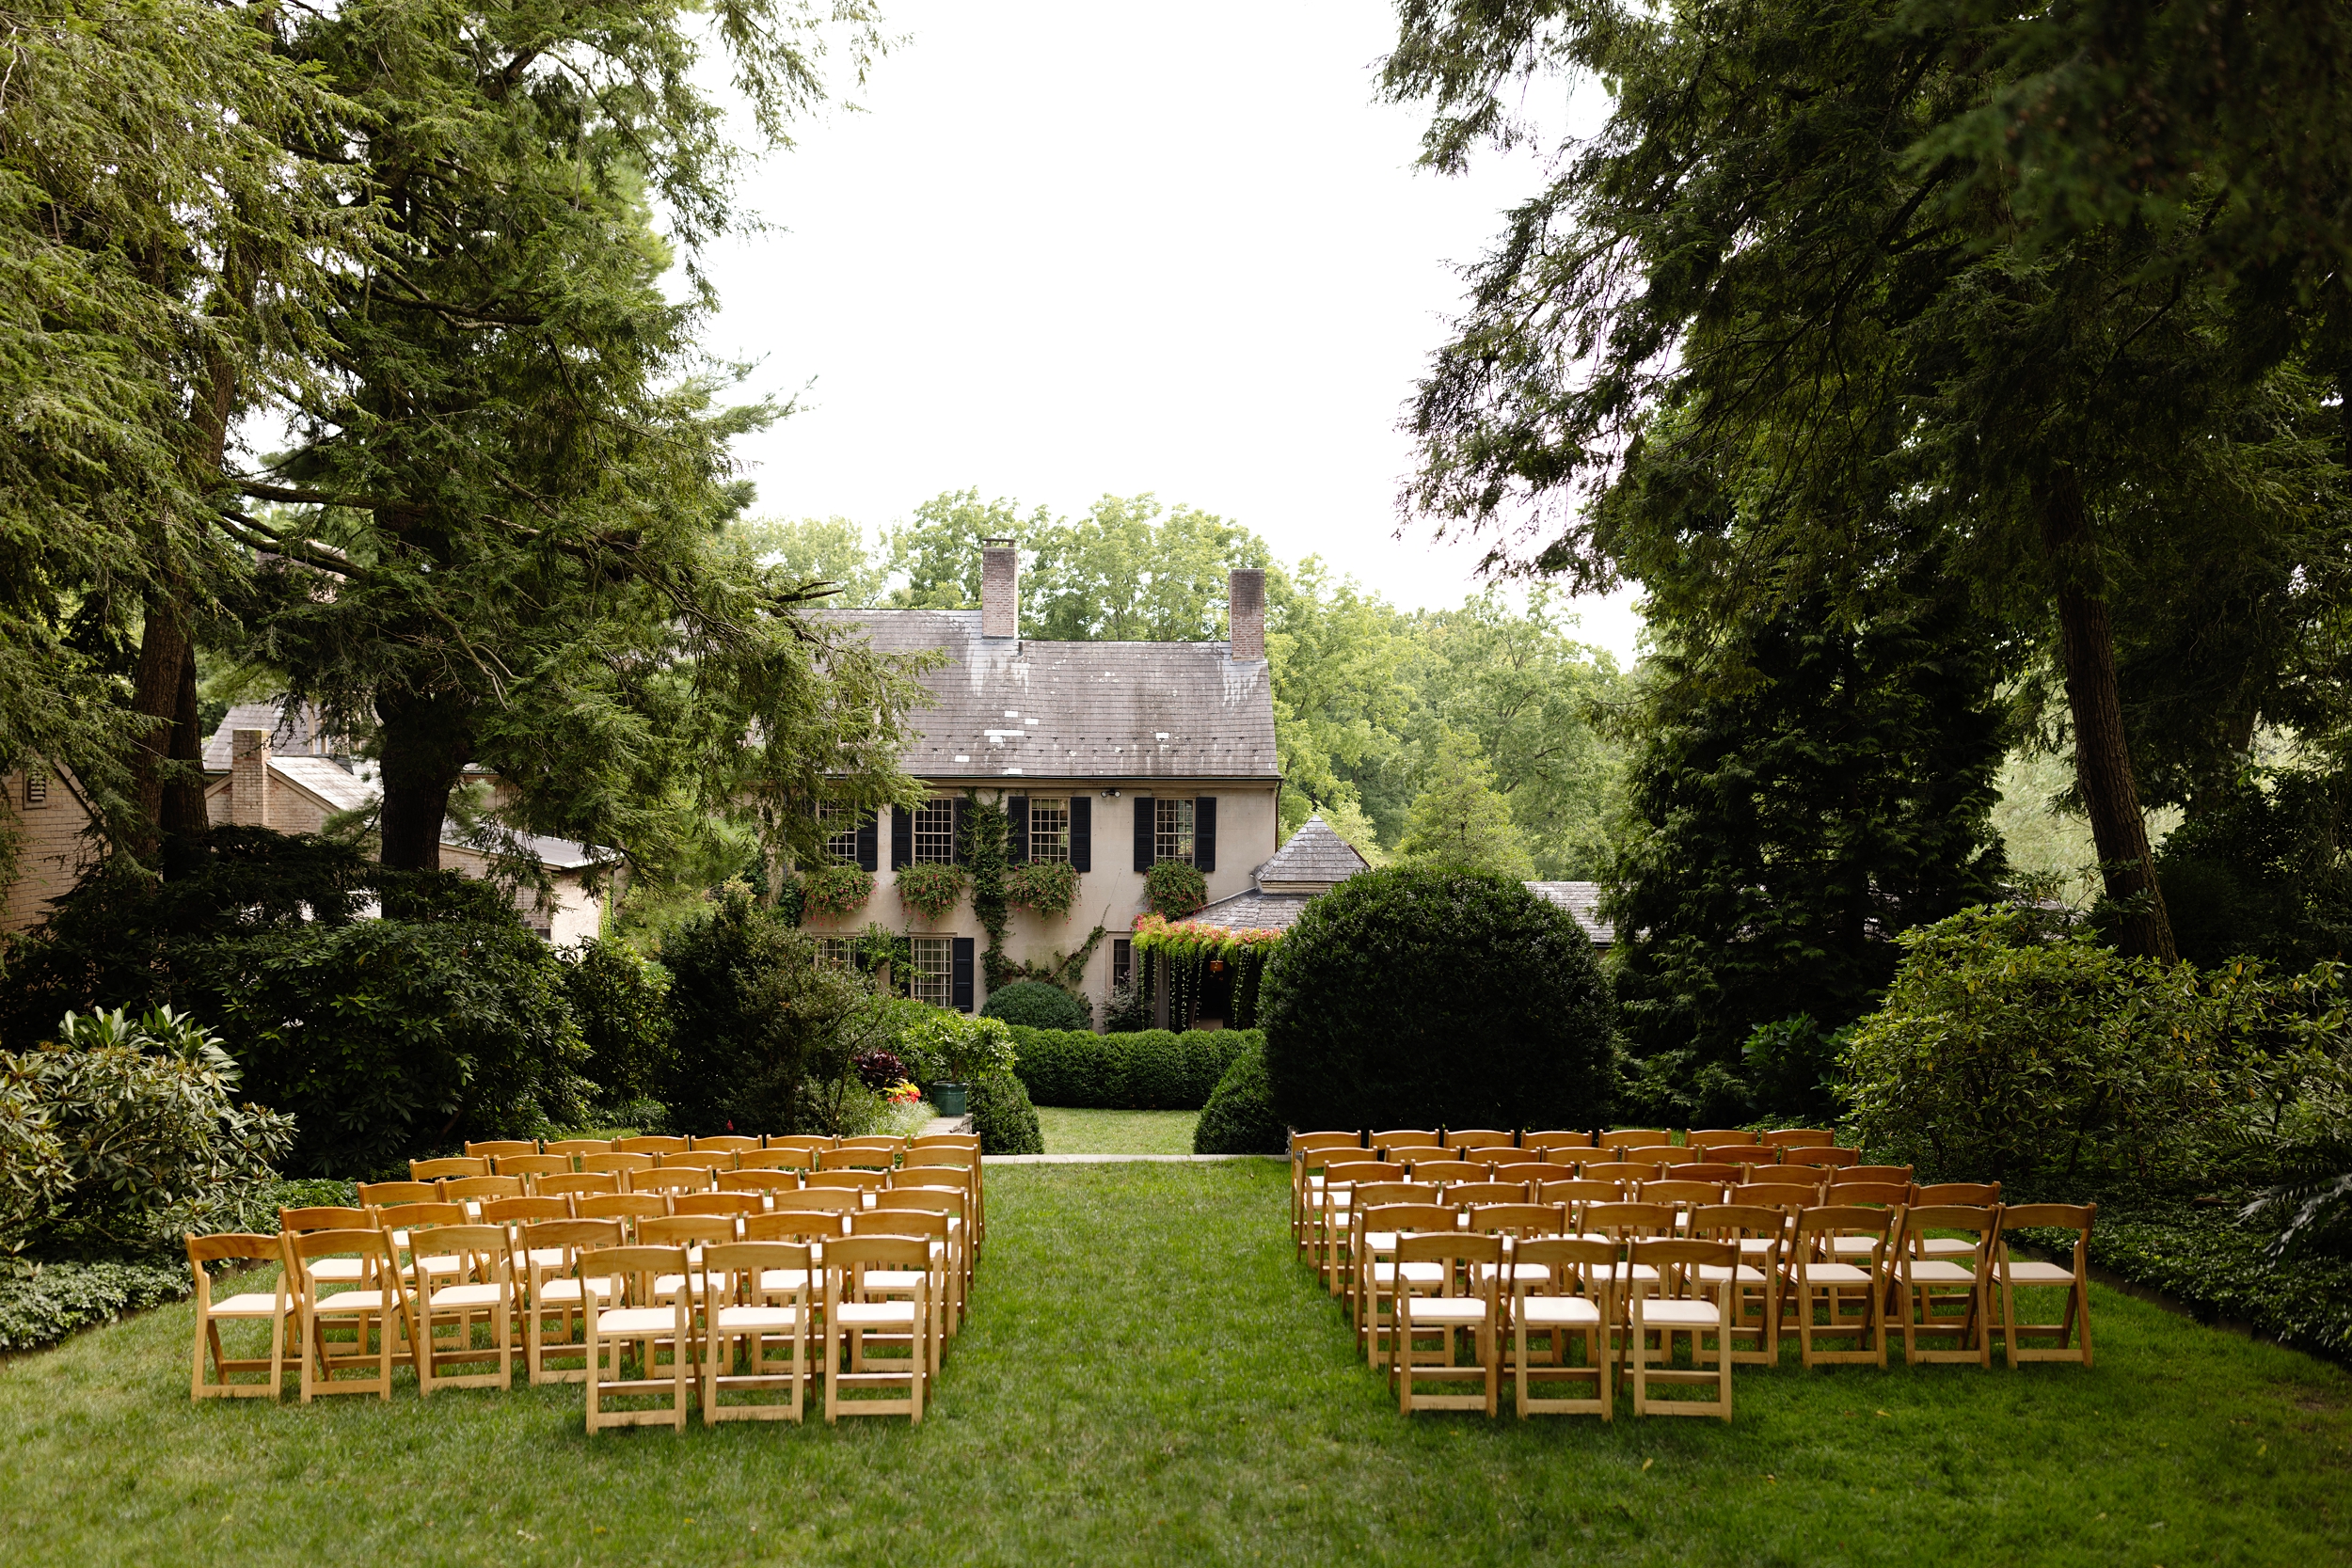 Conestoga House & Gardens Wedding, Lancaster, Pa Wedding. Lancaster, Pa Wedding Photographer